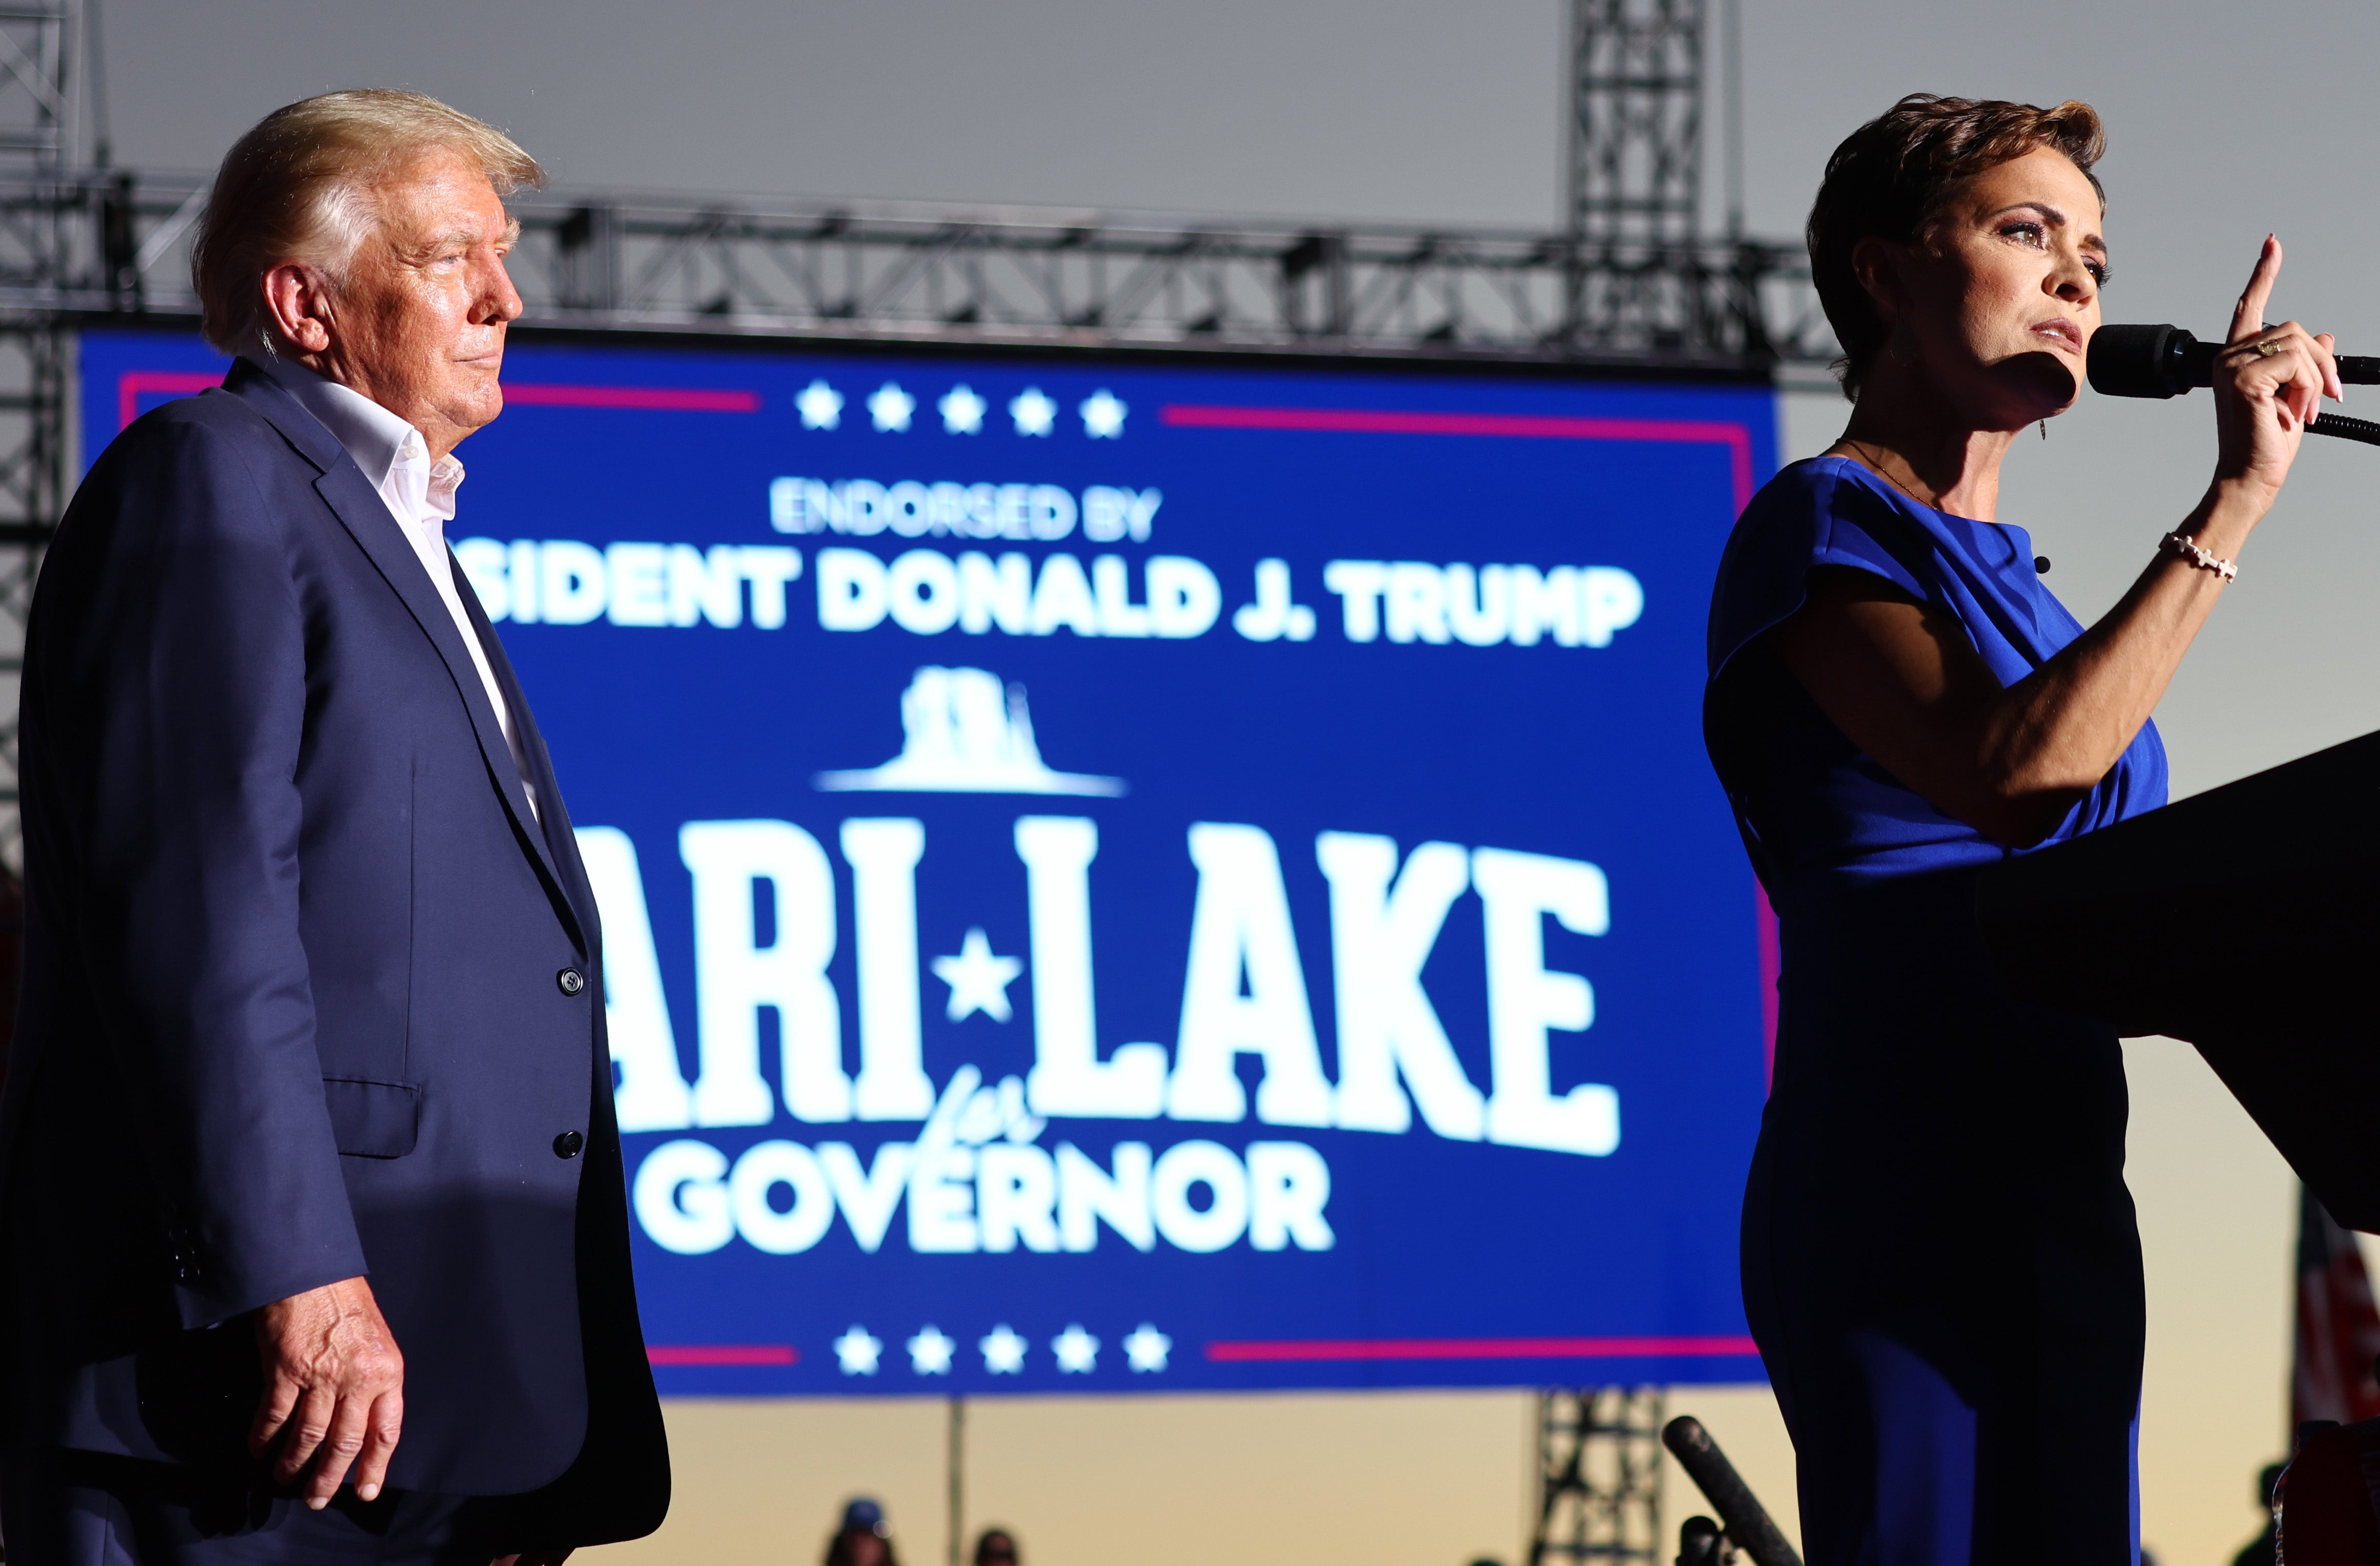 Just like Trump, Lake had a television career before entering politics